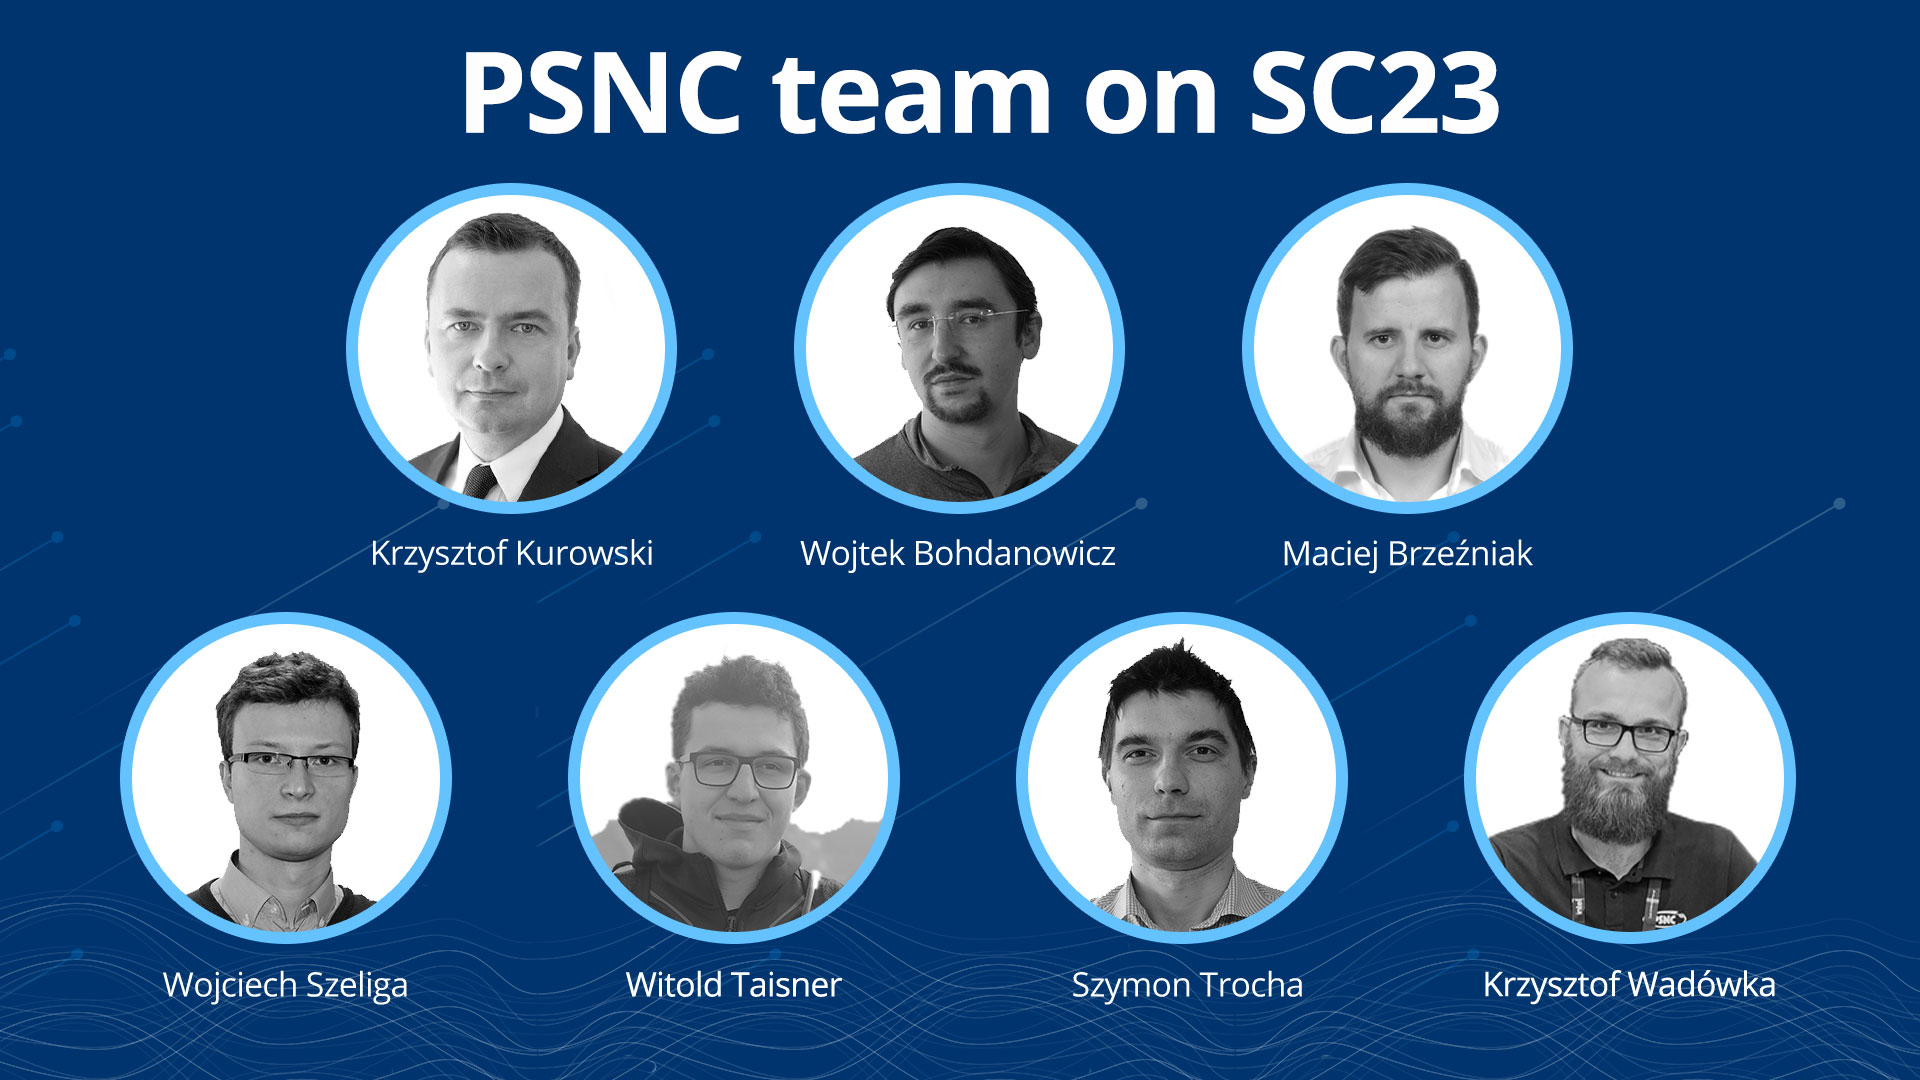 PSNC team on SC23